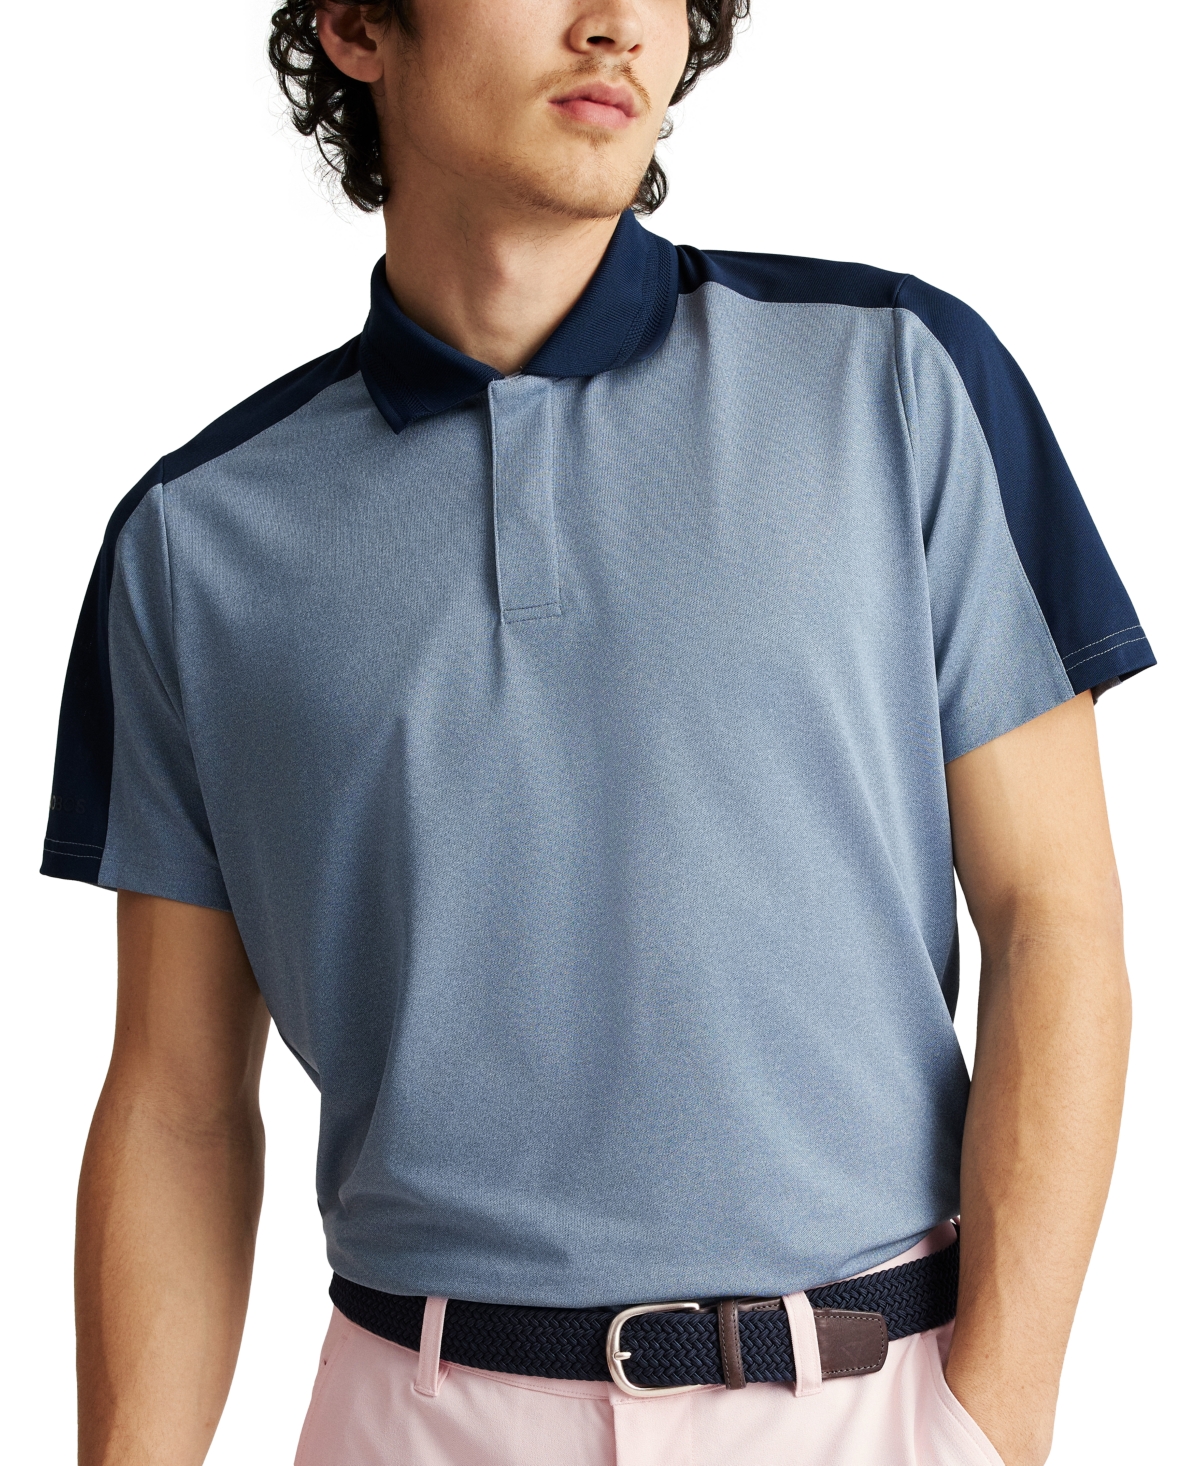 Men's Short-Sleeve Colorblocked Performance Polo Shirt - Lt Denim H